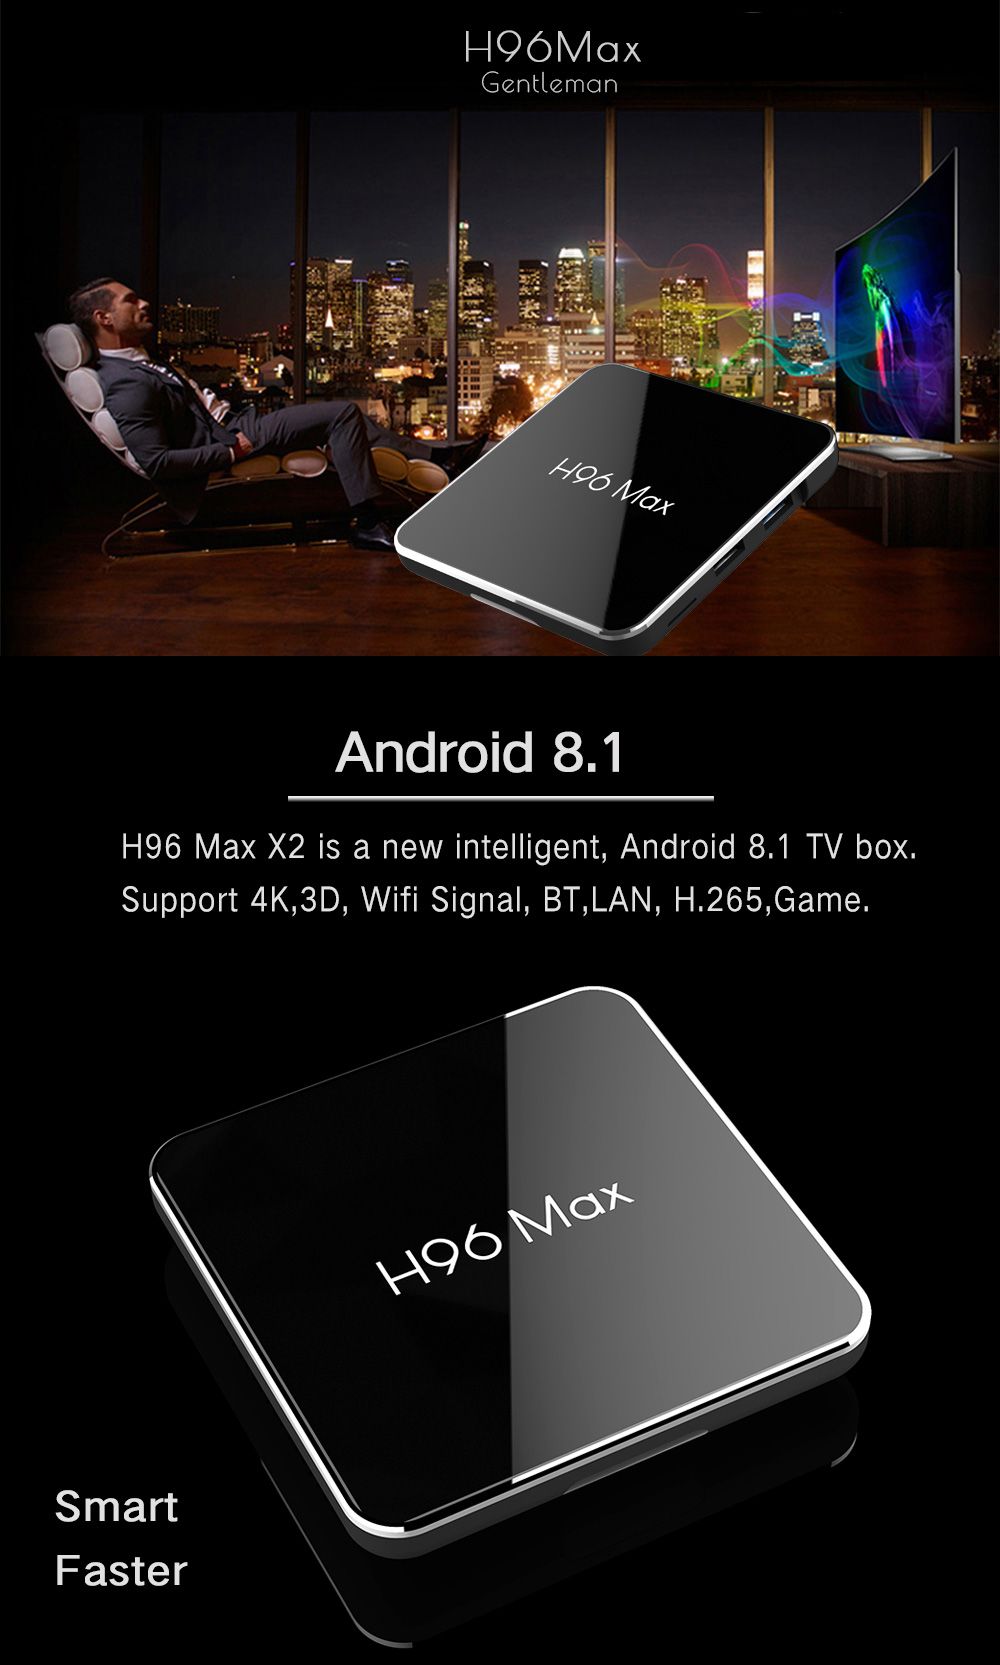 H96-Max-X2-S905X2-4GB-DDR4-RAM-64GB-ROM-4K-Android-81-5G-WiFi-USB30-TV-BOX-1373067